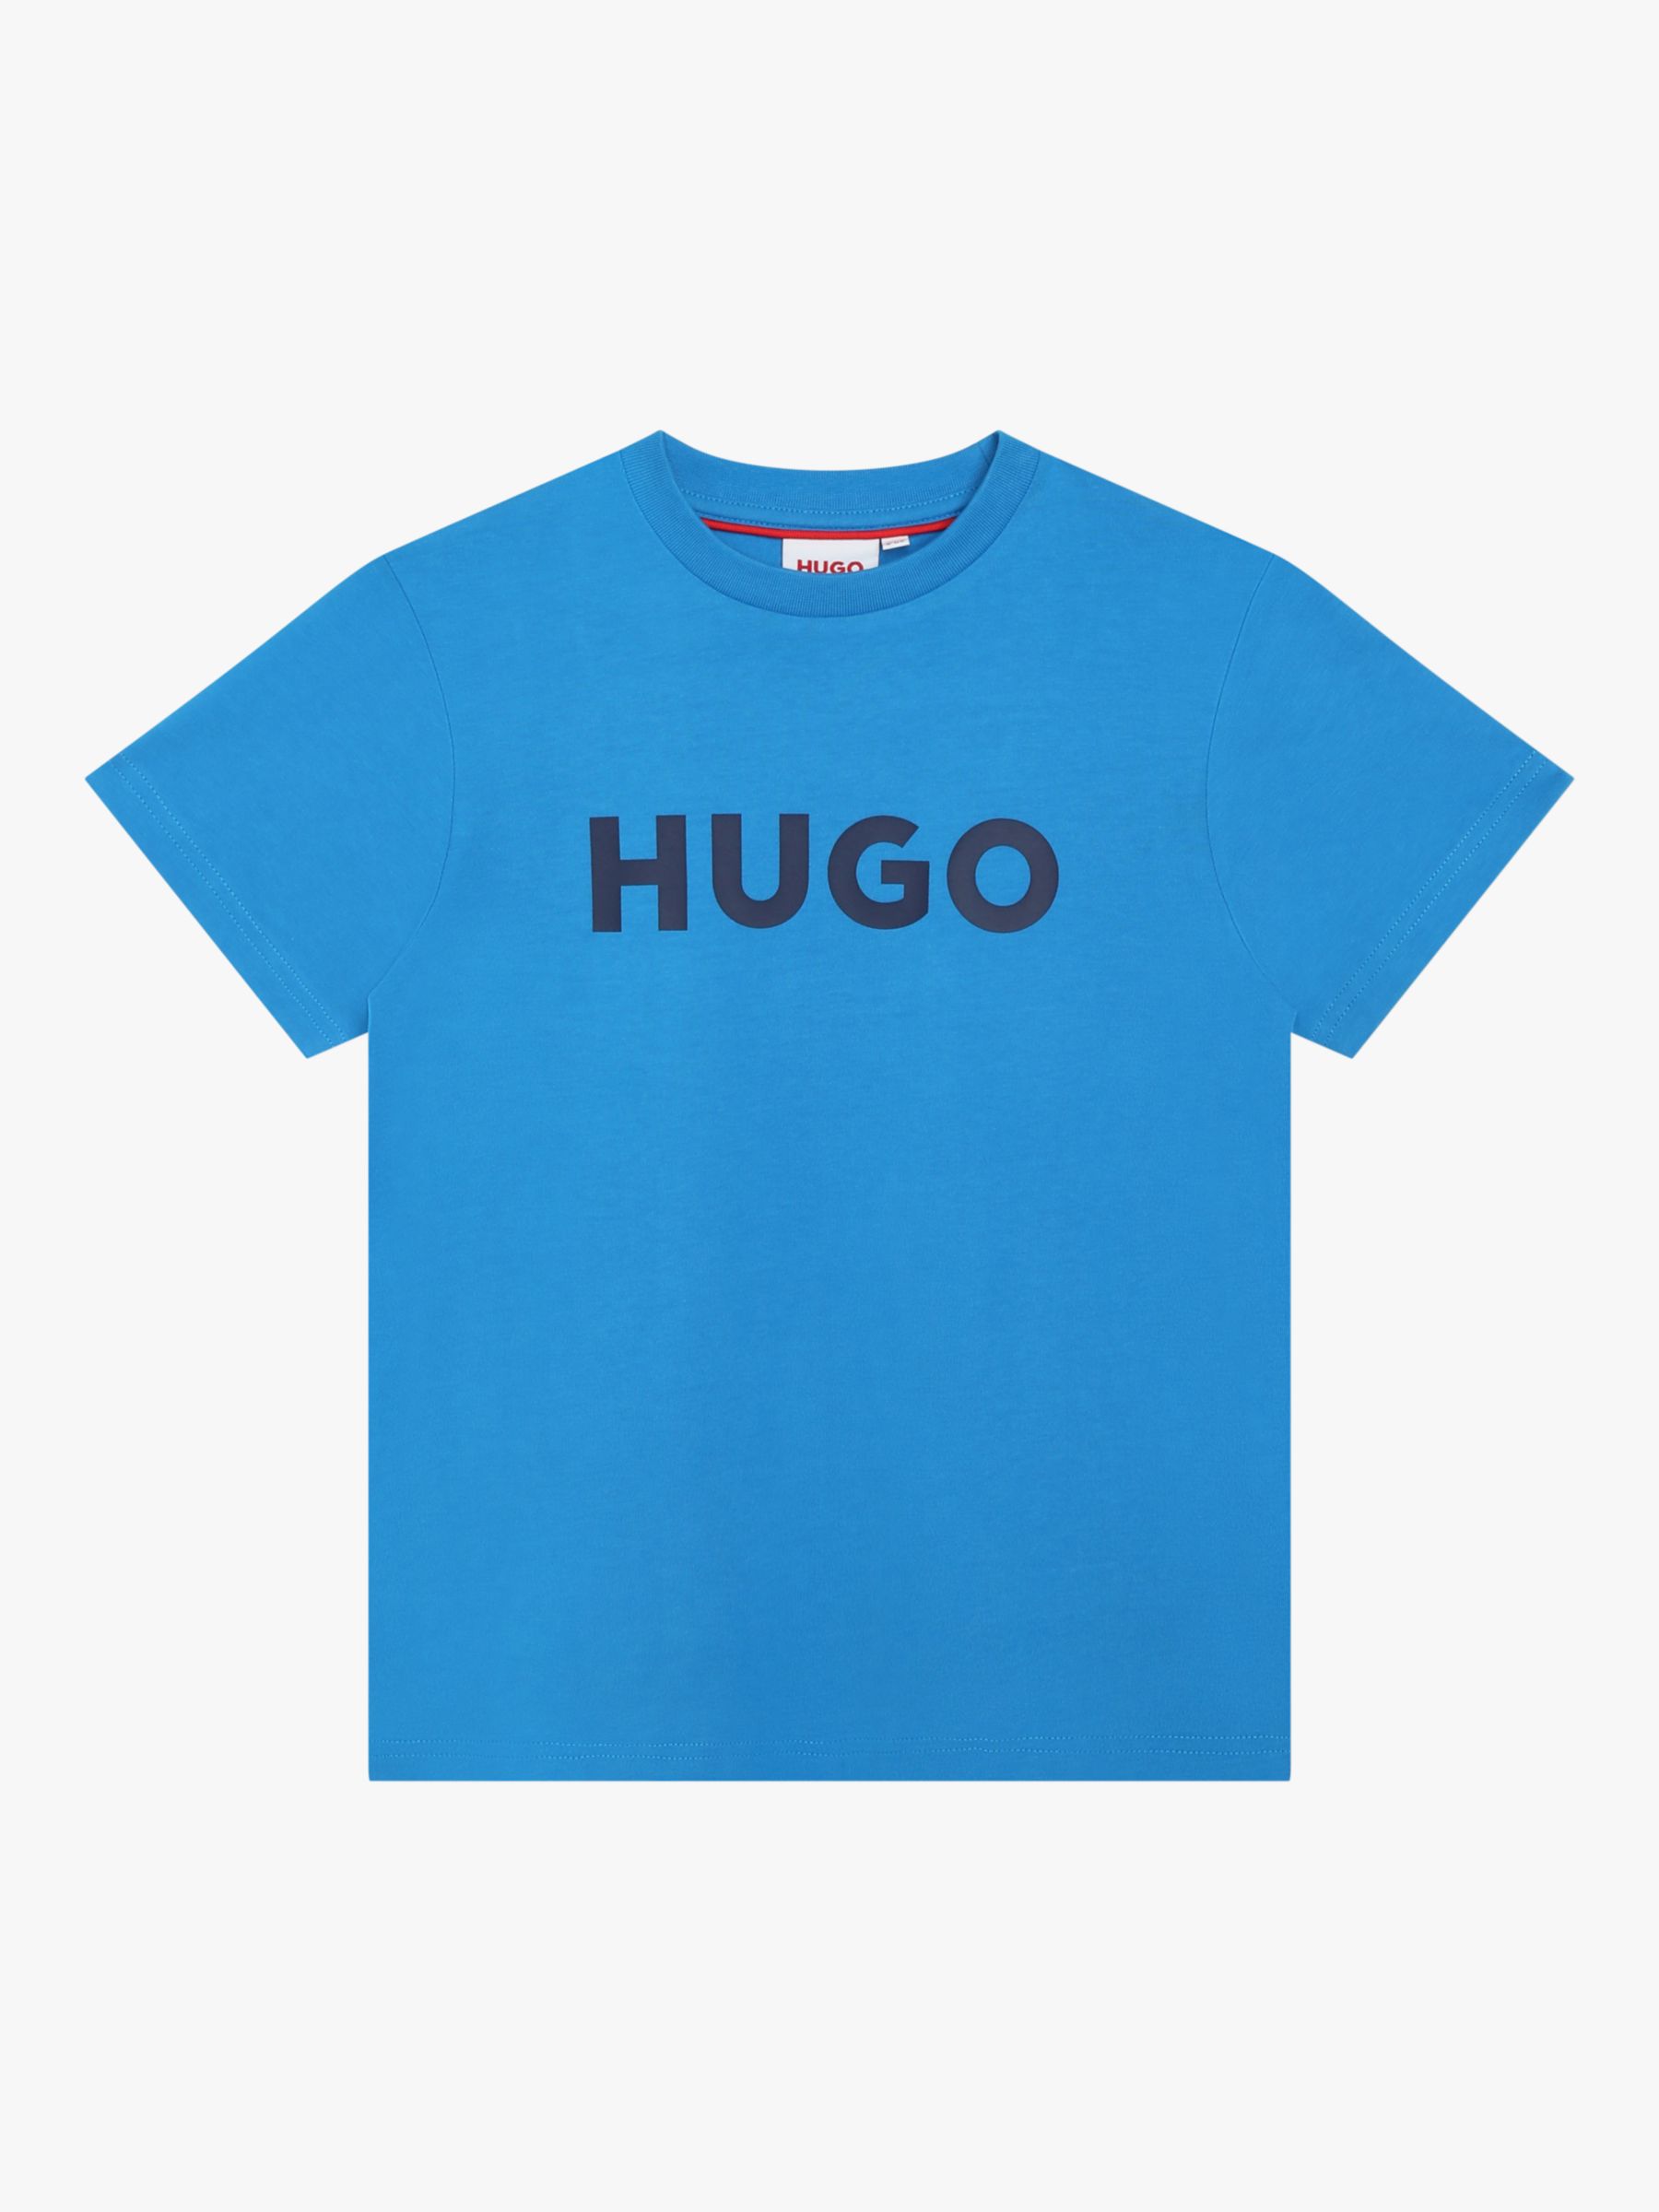 HUGO Kids' Large Logo Print T-Shirt, Blue/Navy, 5 years